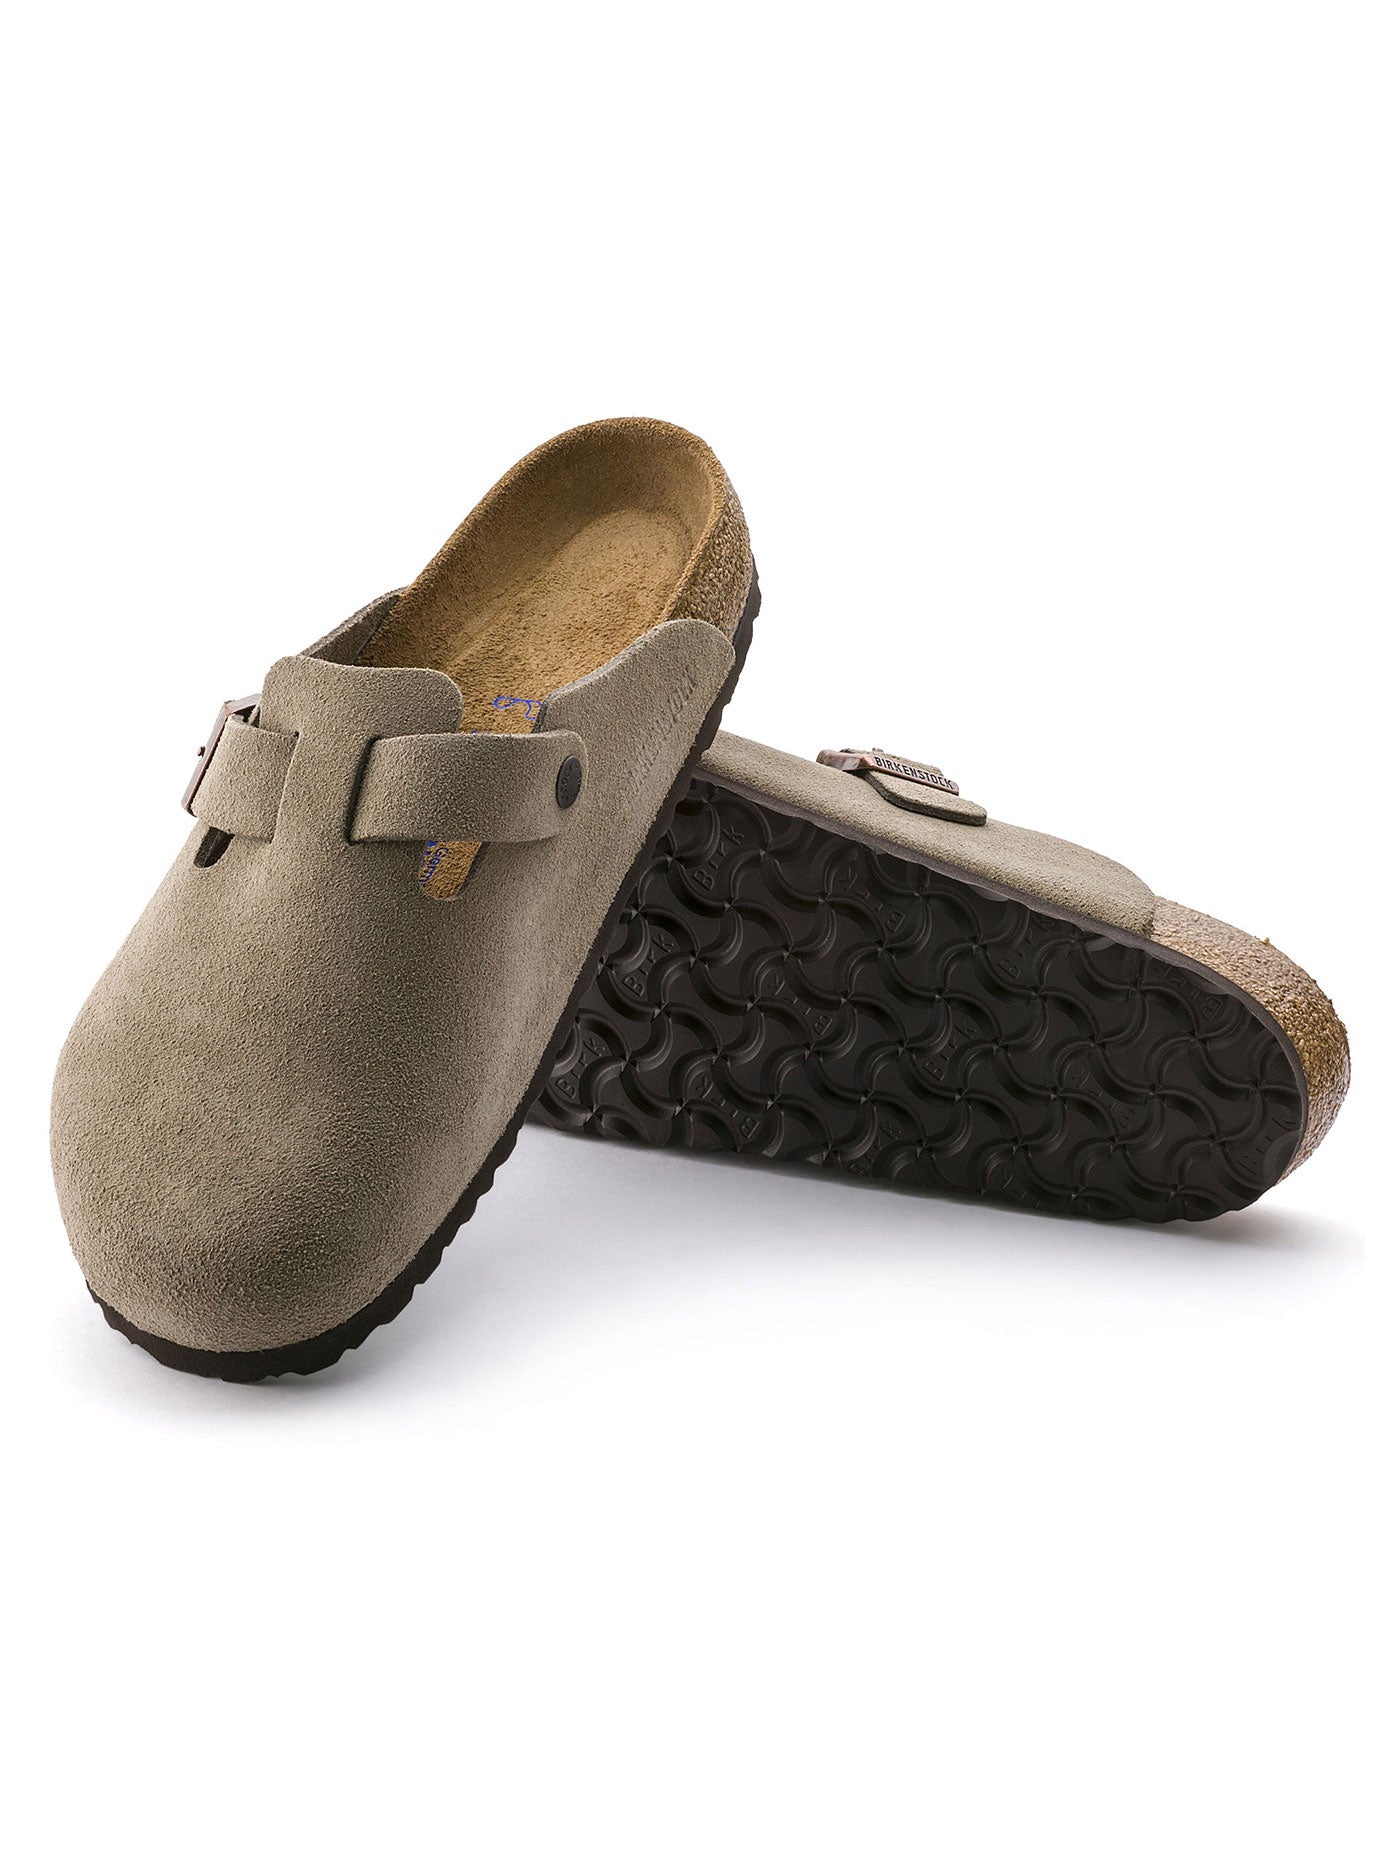 Birkenstock Boston Soft Footbed Taupe Suede Sandals